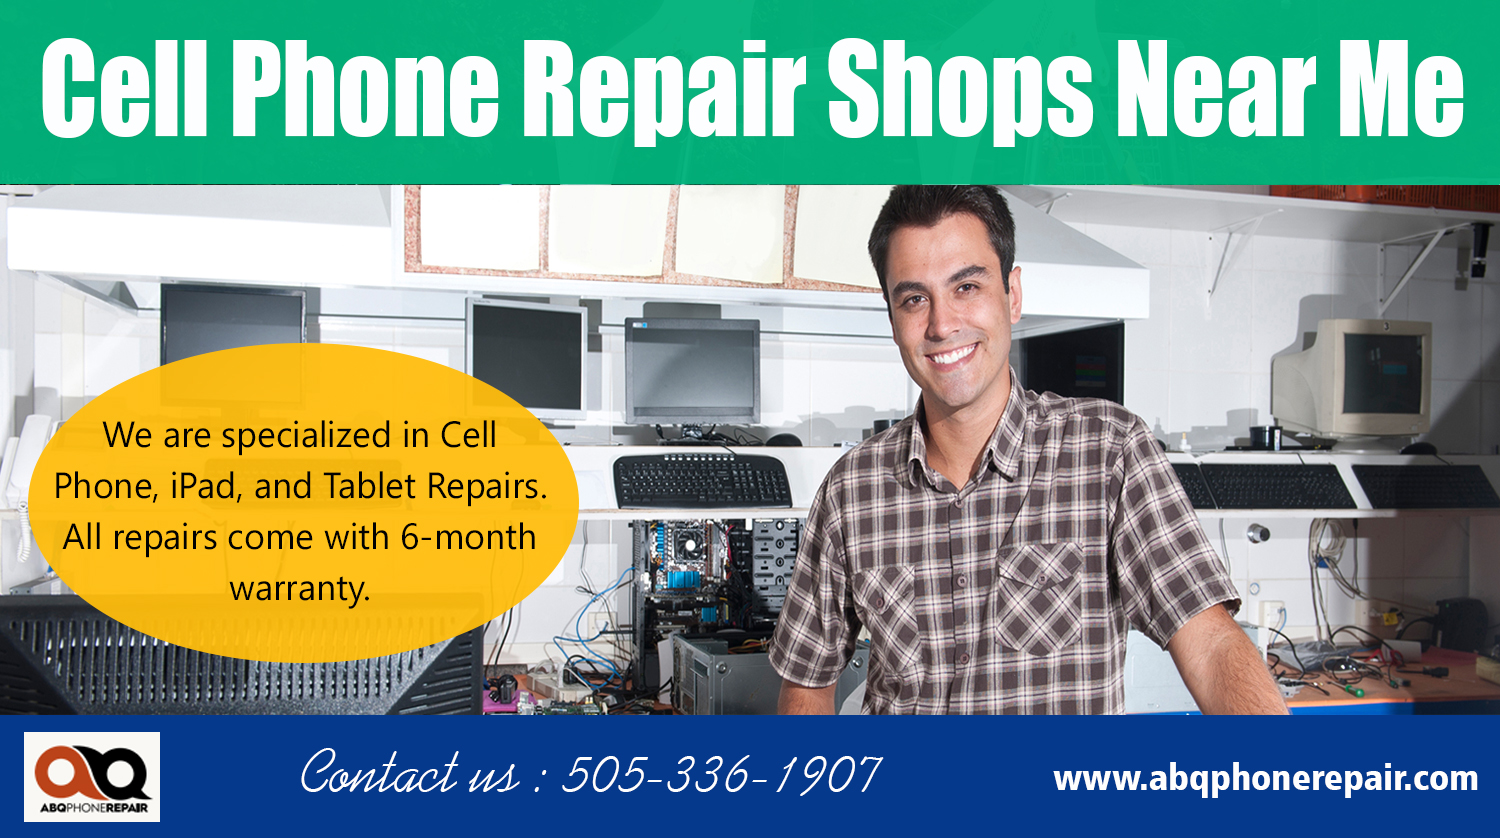 Cell Phone Repair Shops near me | Call - 505-336-1907 | abqphonerepair.com - Manufacturers ...